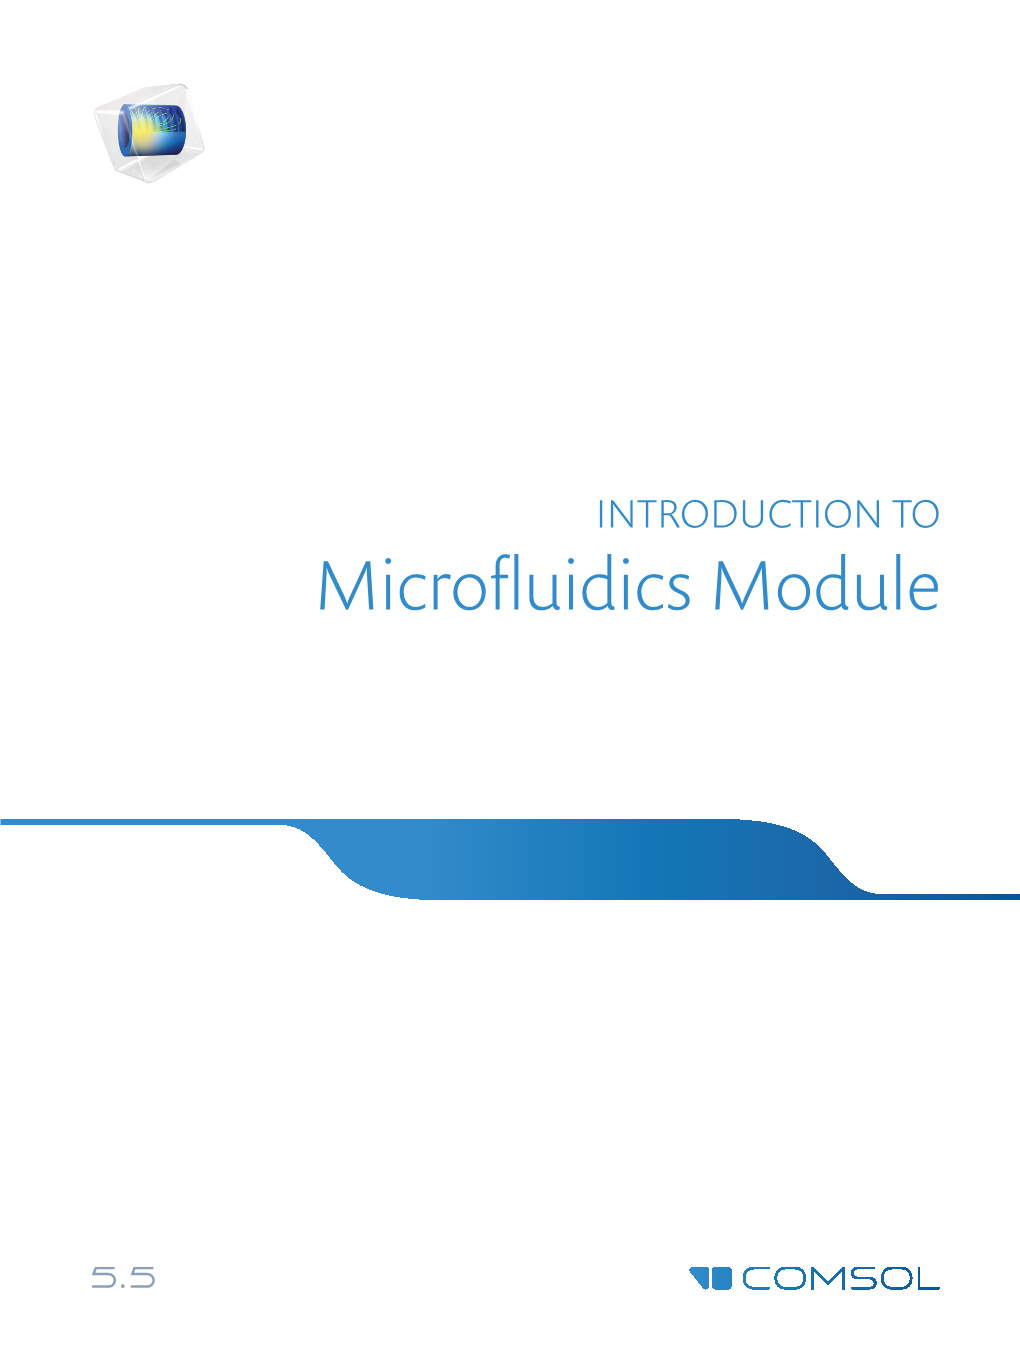 Introduction to the Microfluidics Module